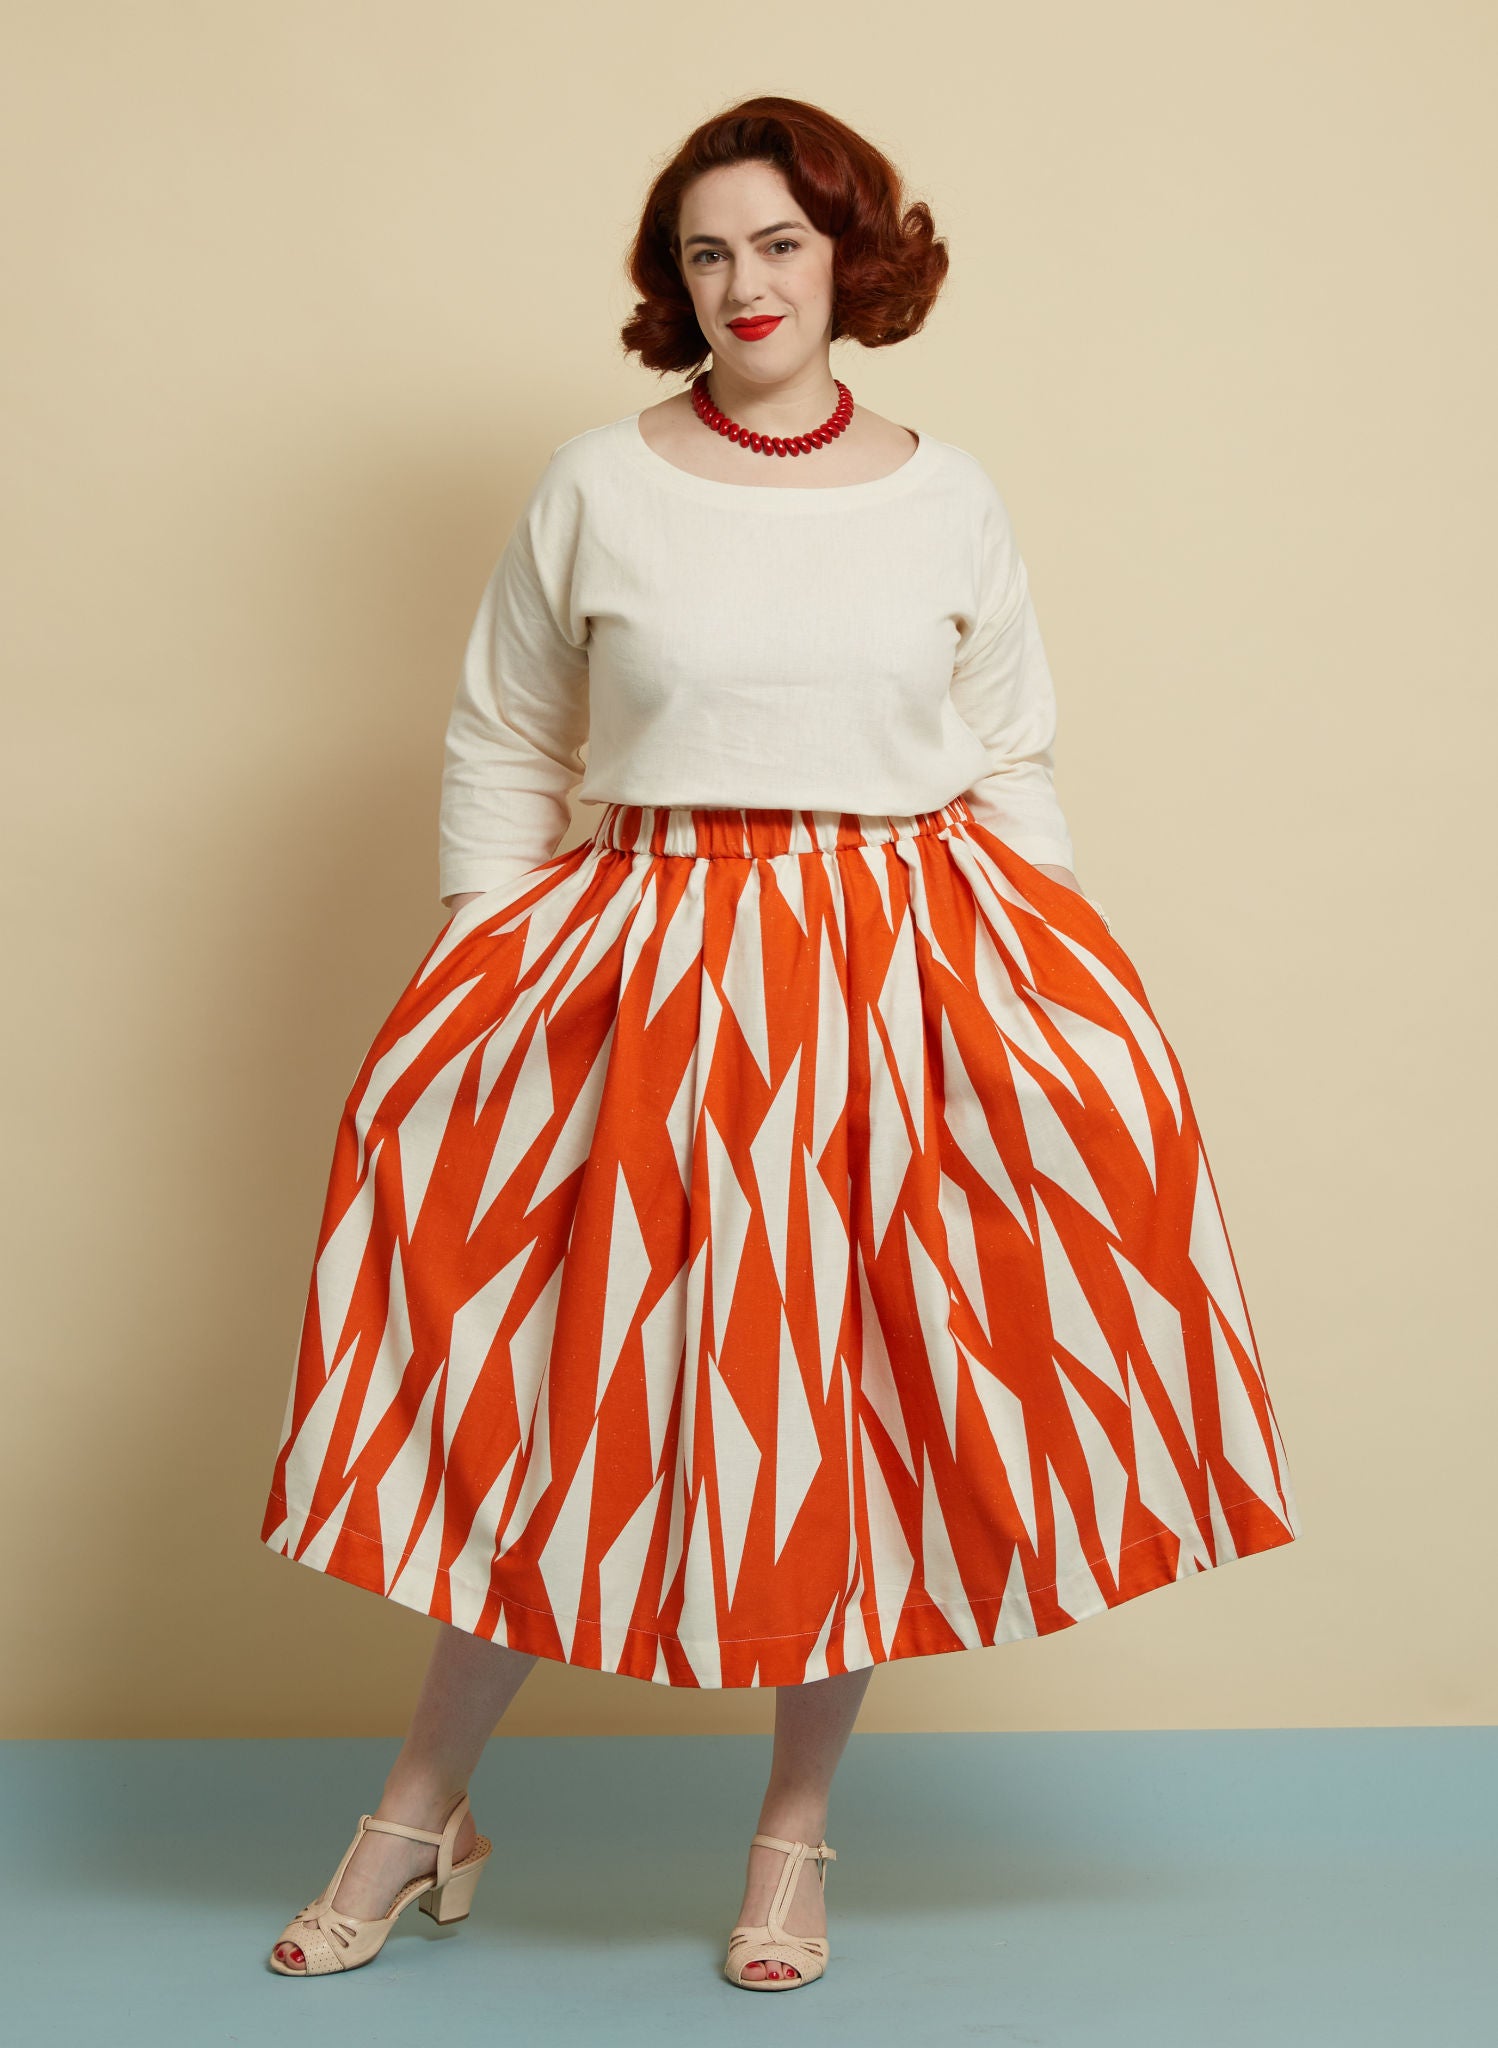 Red & White Sails Print Midi Skirt | Cotton & Linen | Made in UK